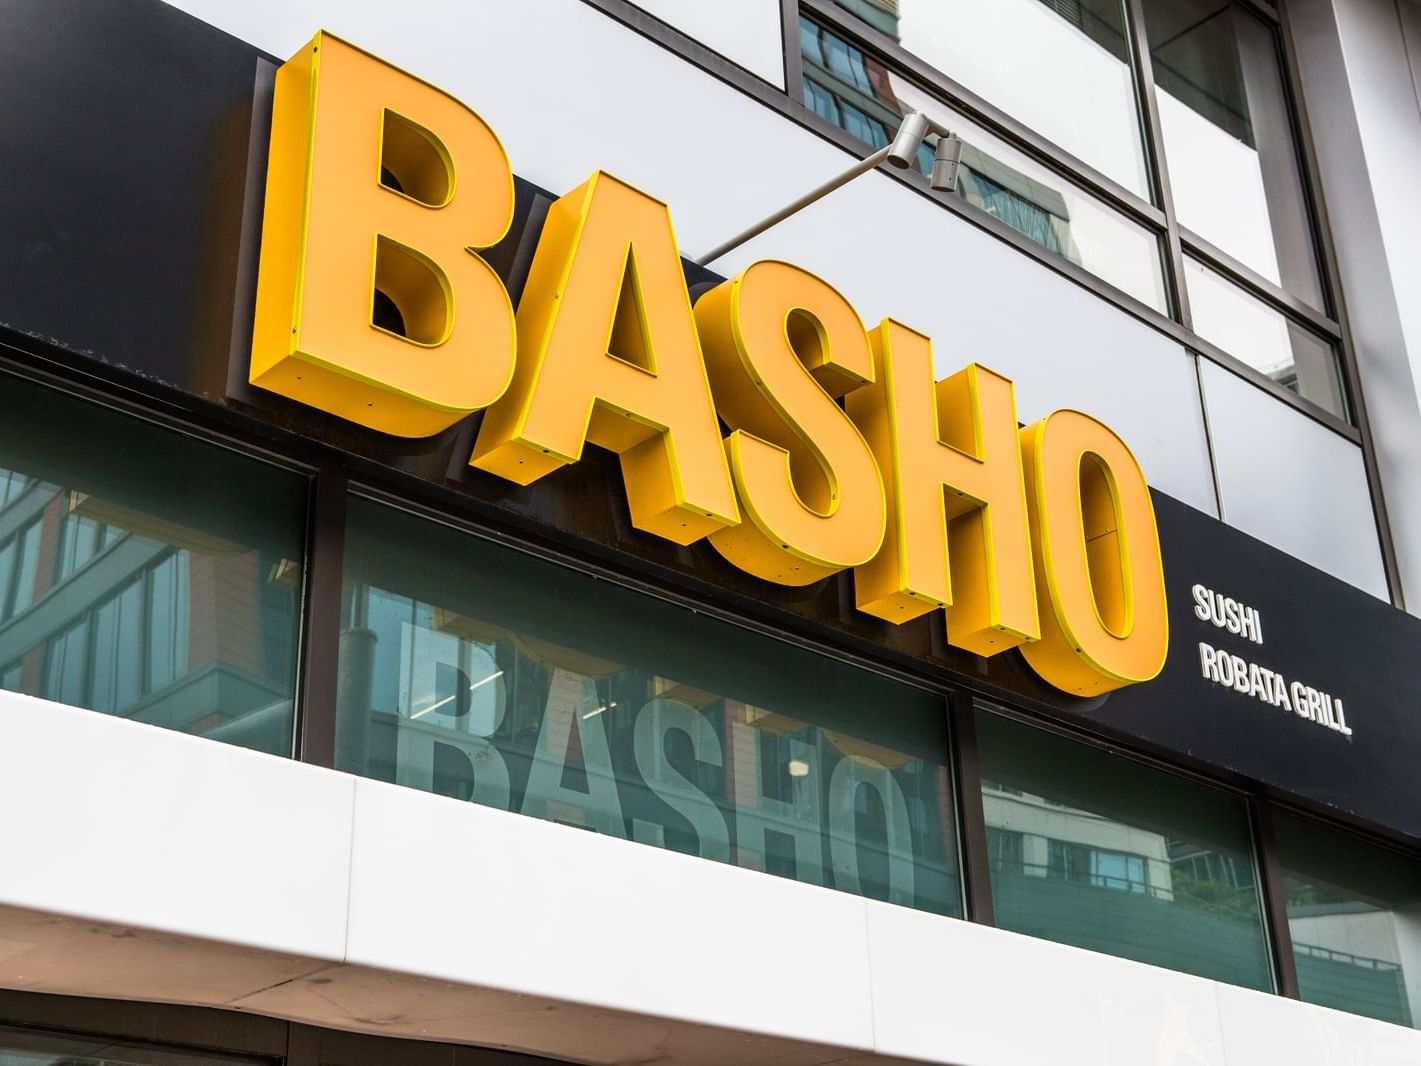 Basho Grill Restaurant Exterior